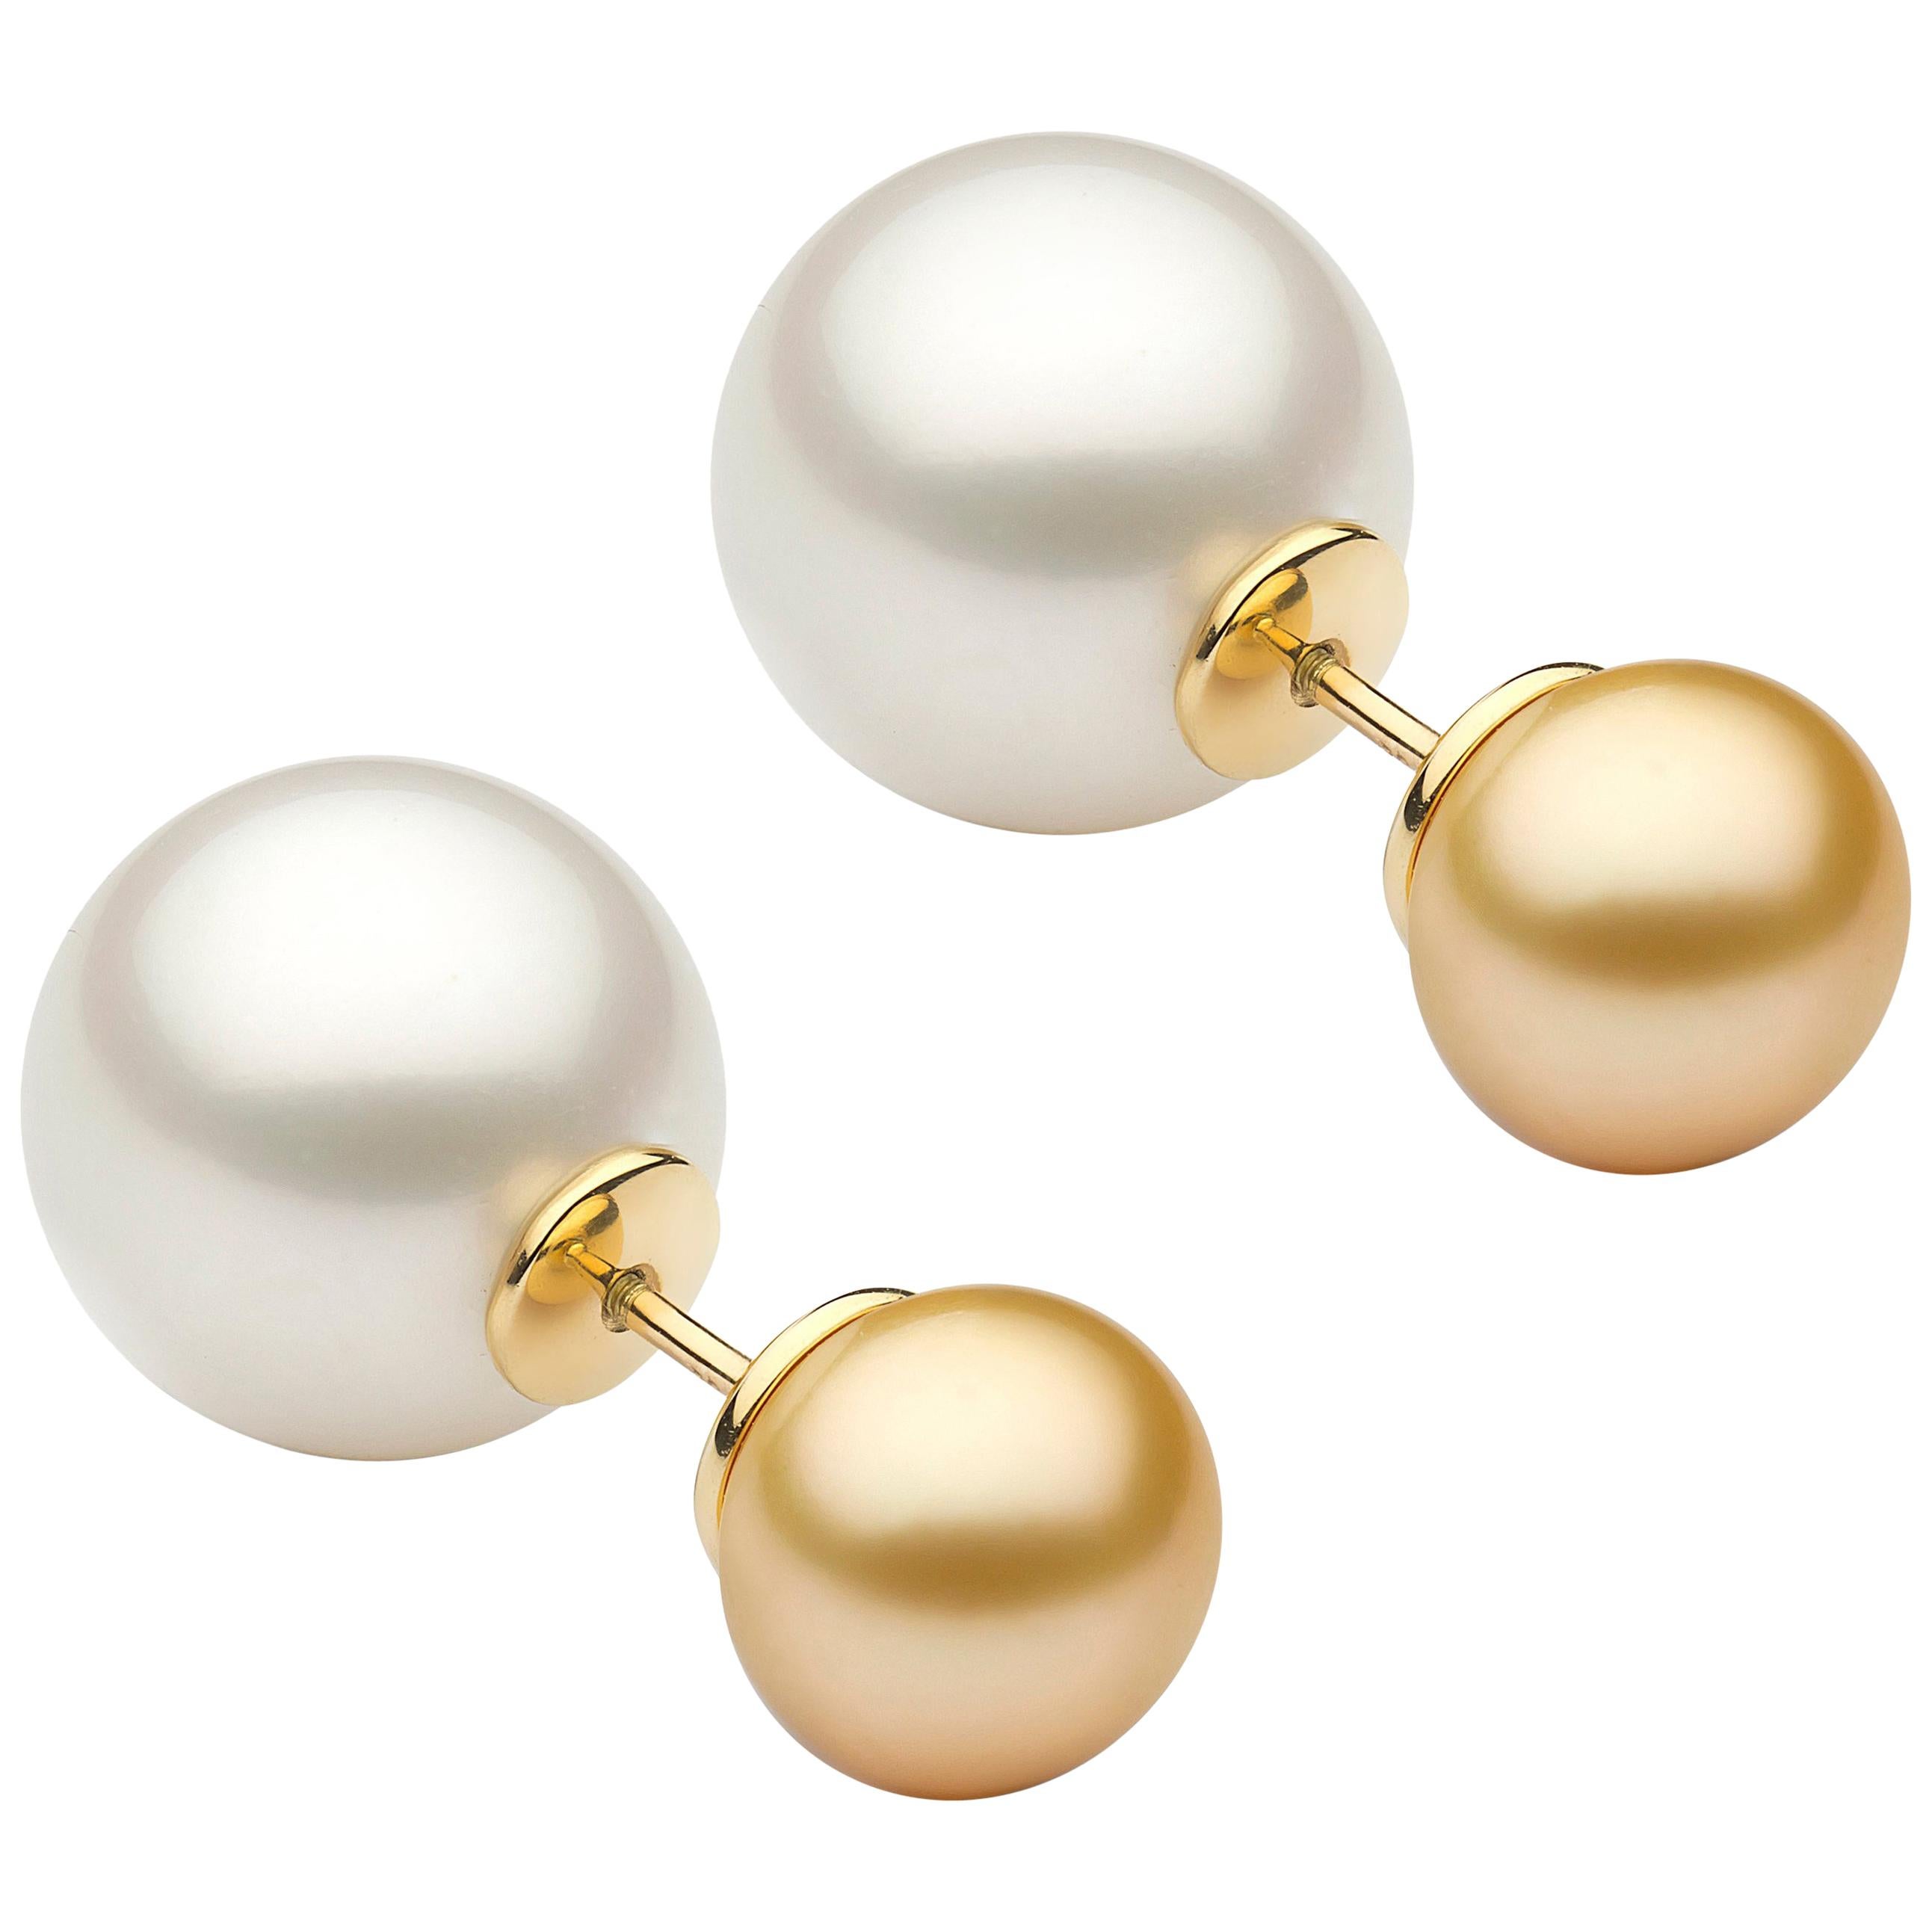 Yoko London White and Golden South Sea Duet Earrings Set in 18 Karat Yellow Gold For Sale